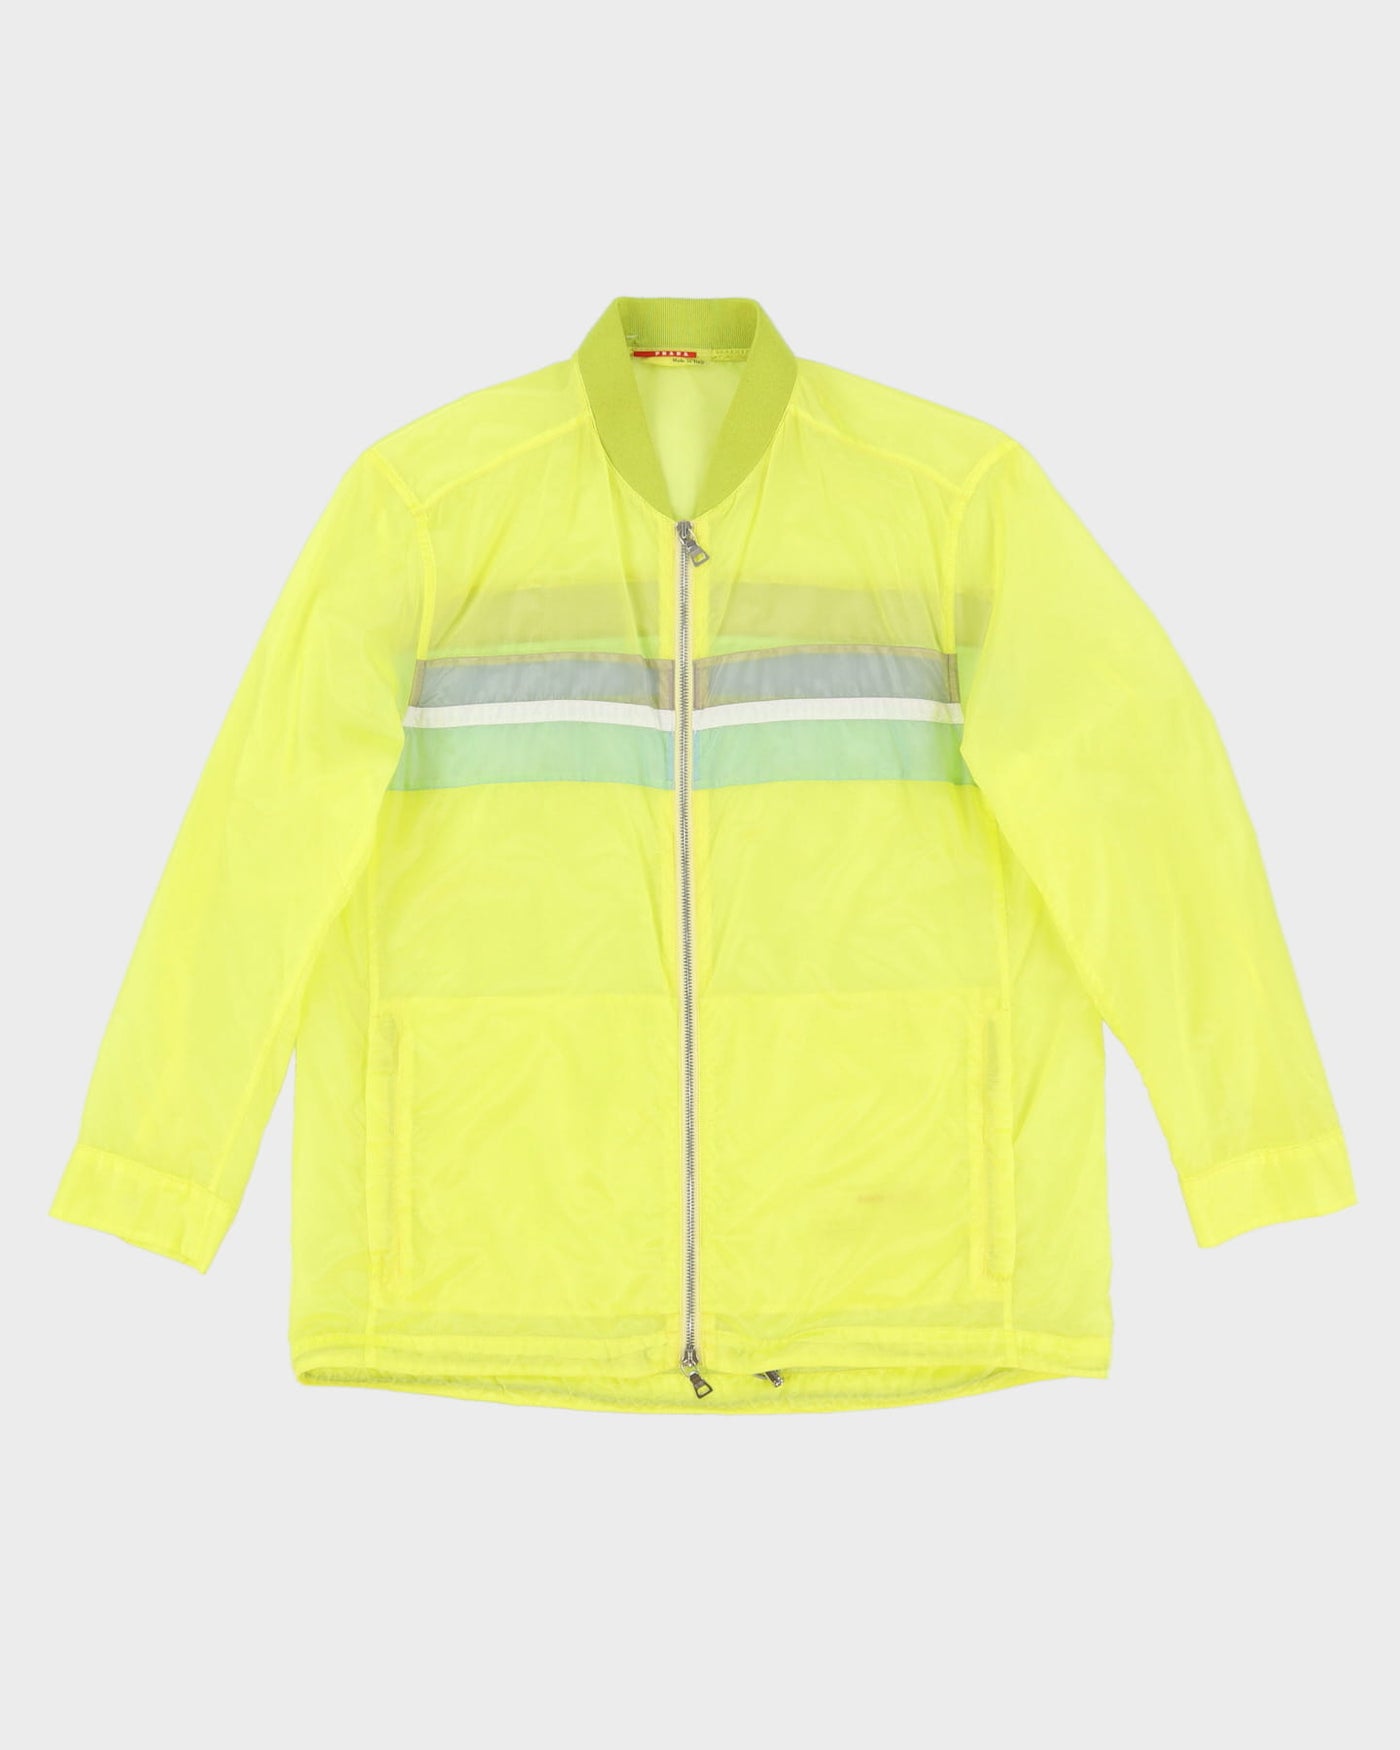 Prada 1990s Yellow Windbreaker jacket - M